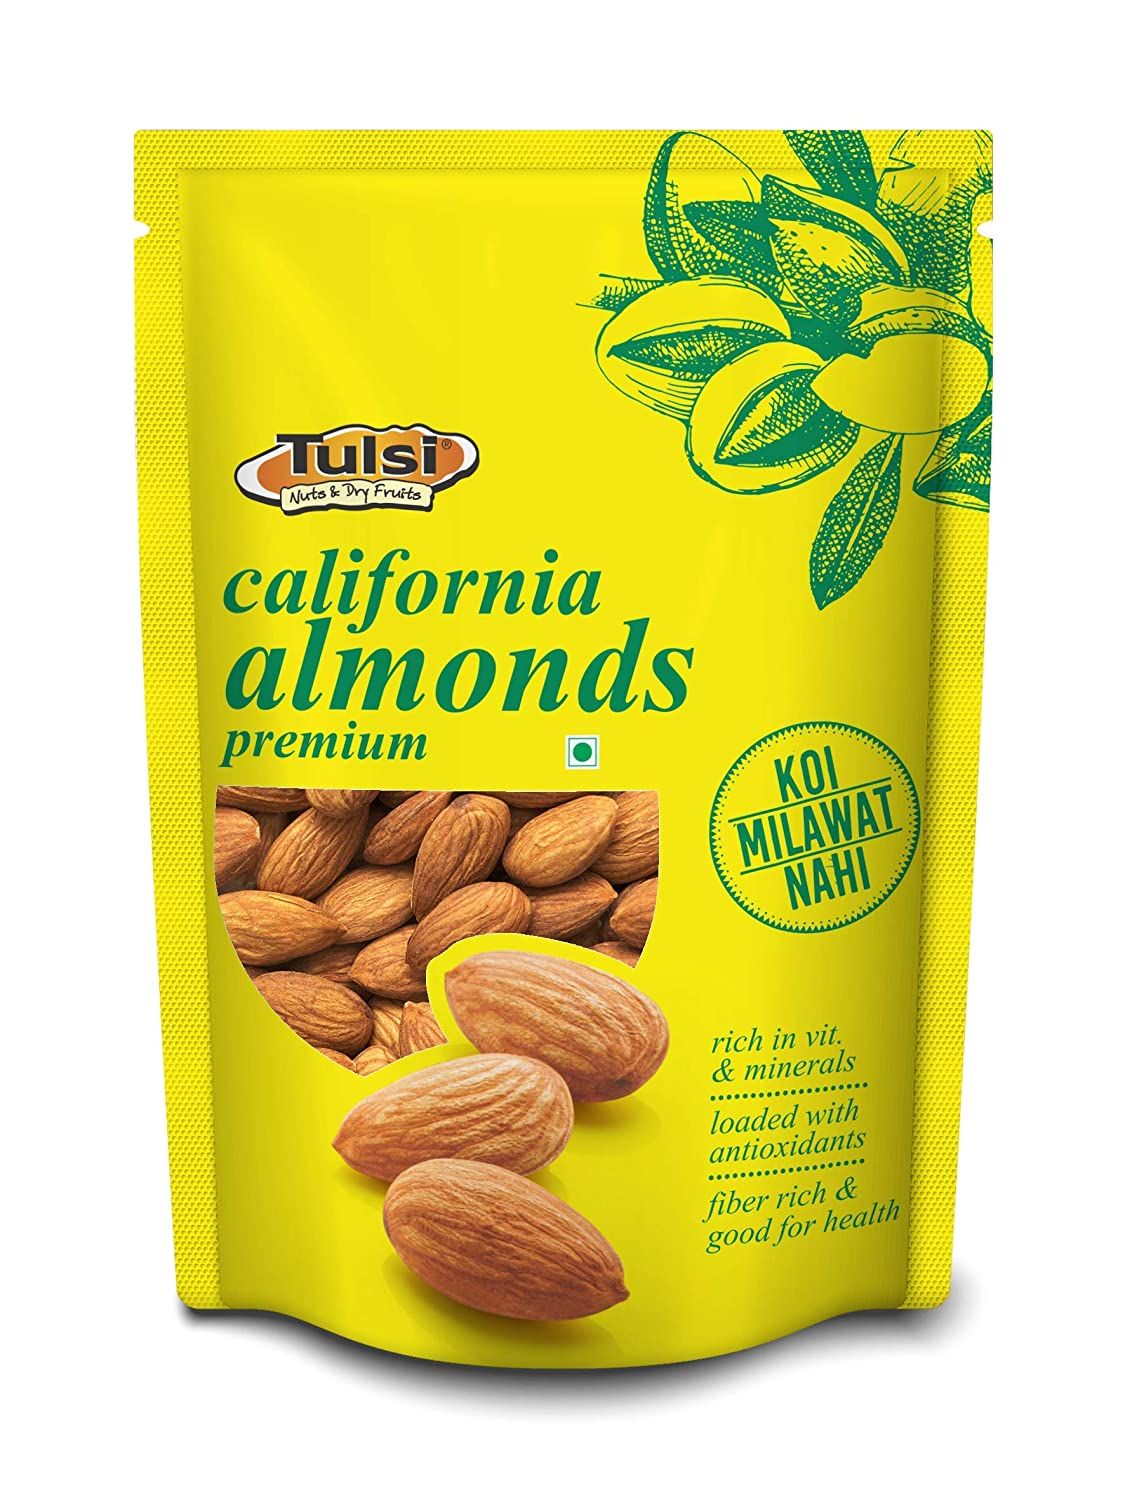 Tulsi Californian Almonds Image